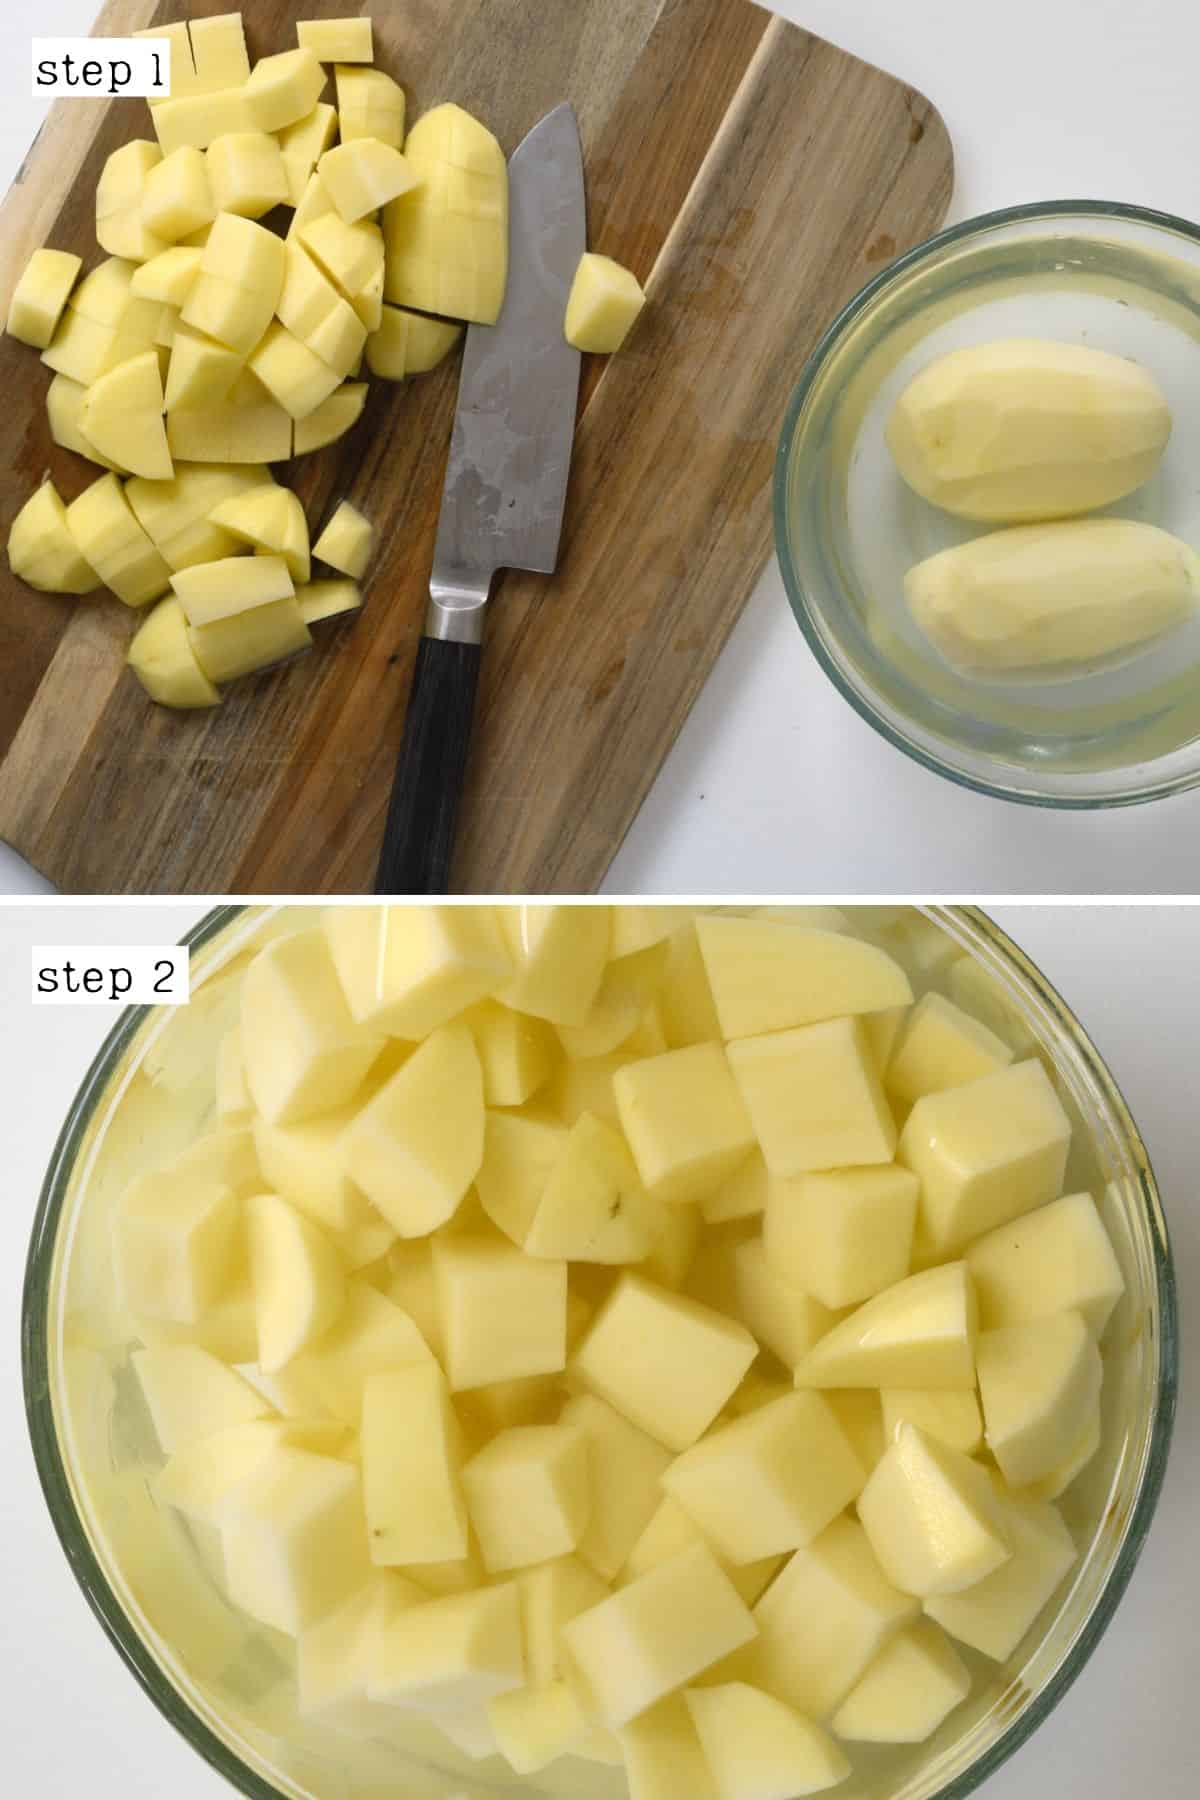 Steps for preparing chopped potatoes